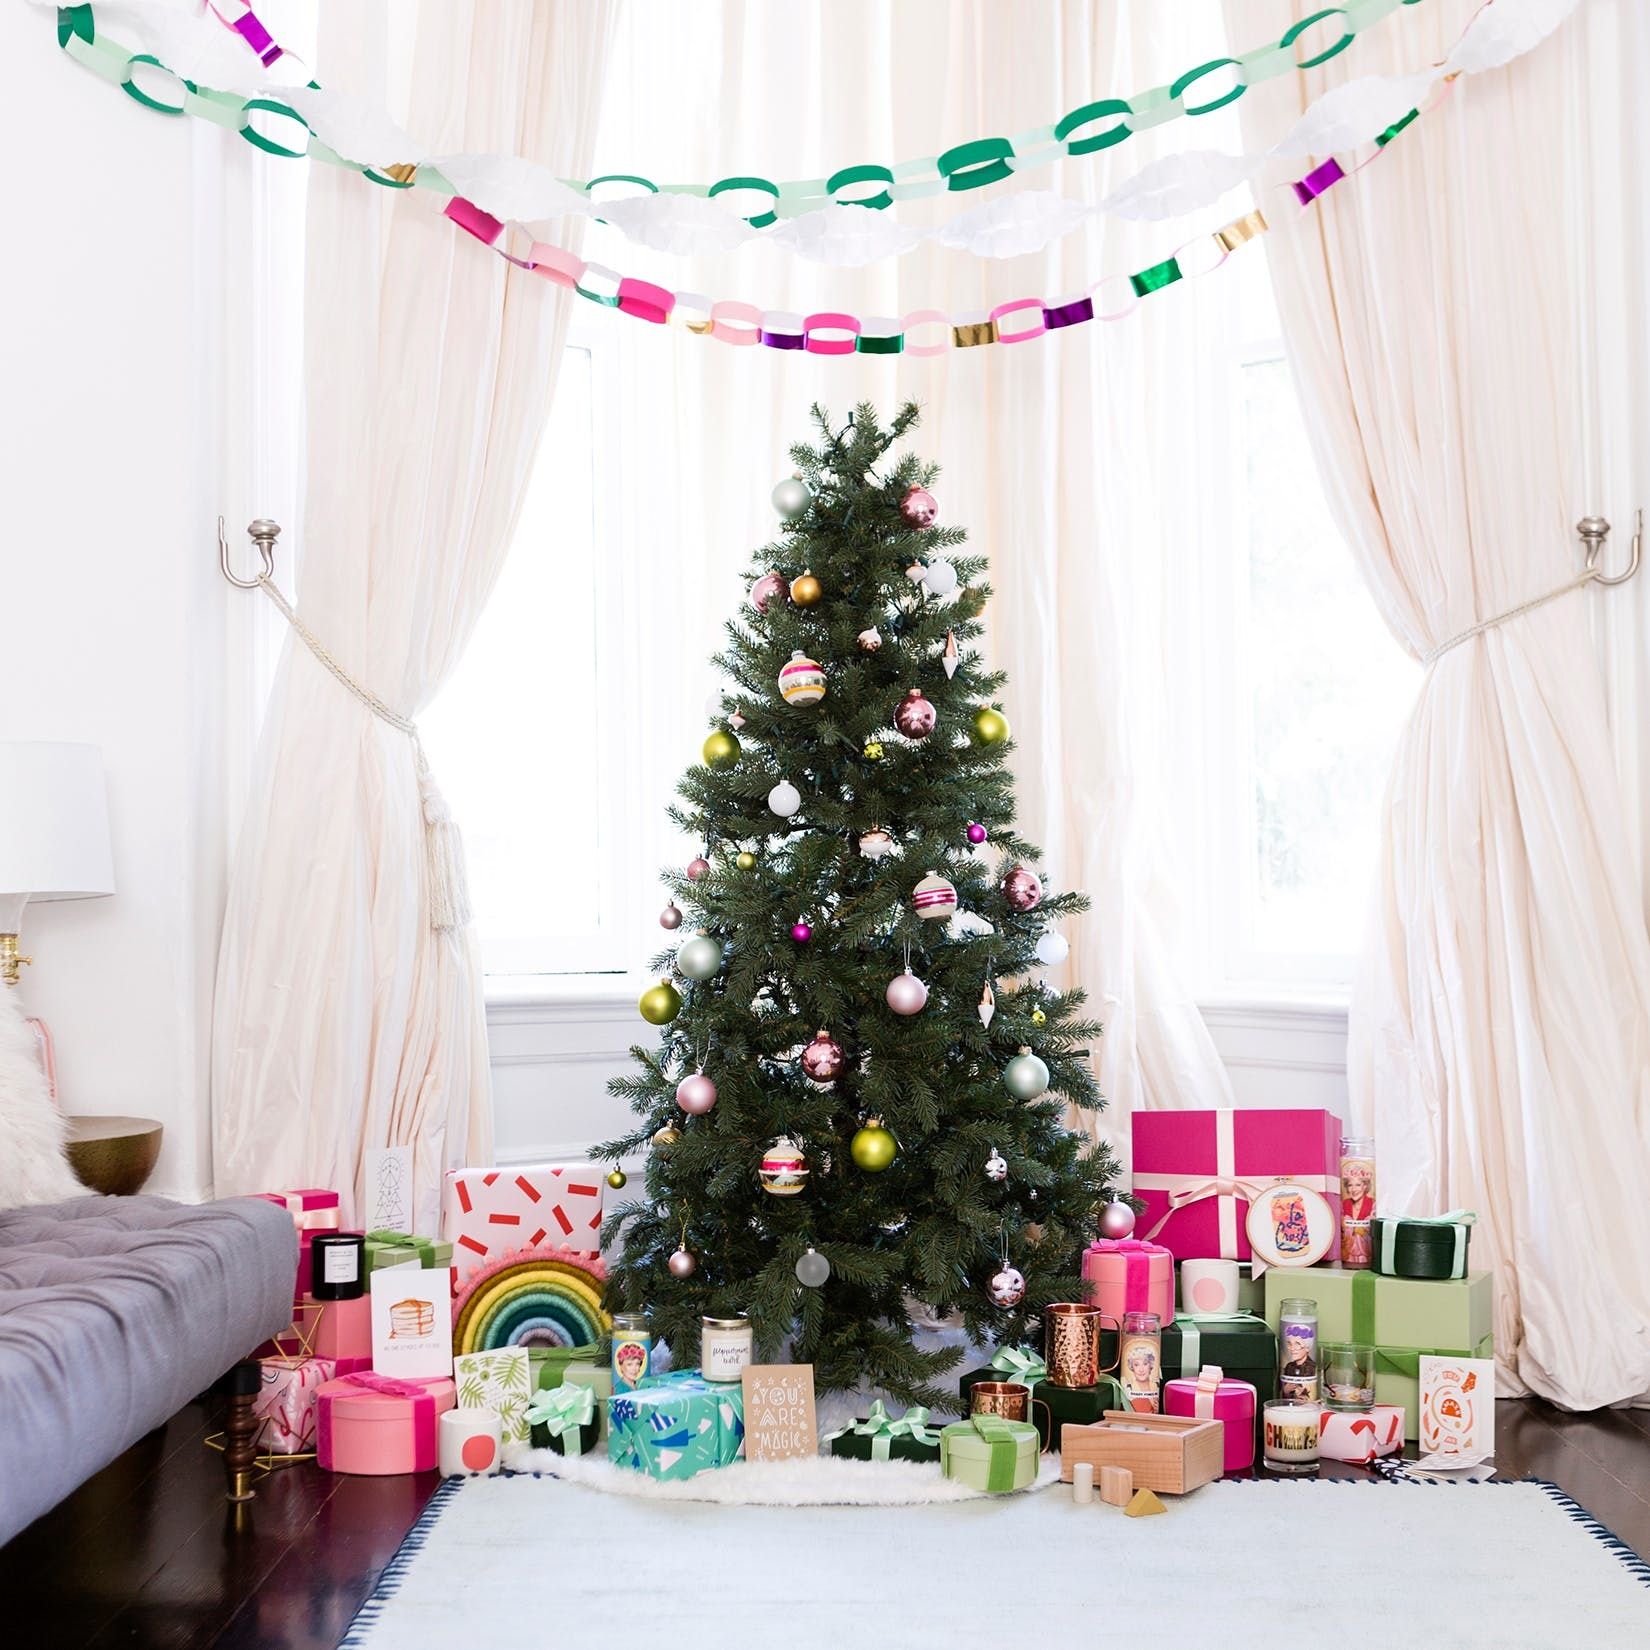 DIY Kit, Painting kit, ChristmasTree Ornament decor,Craft Kit, wooden –  jillmakes